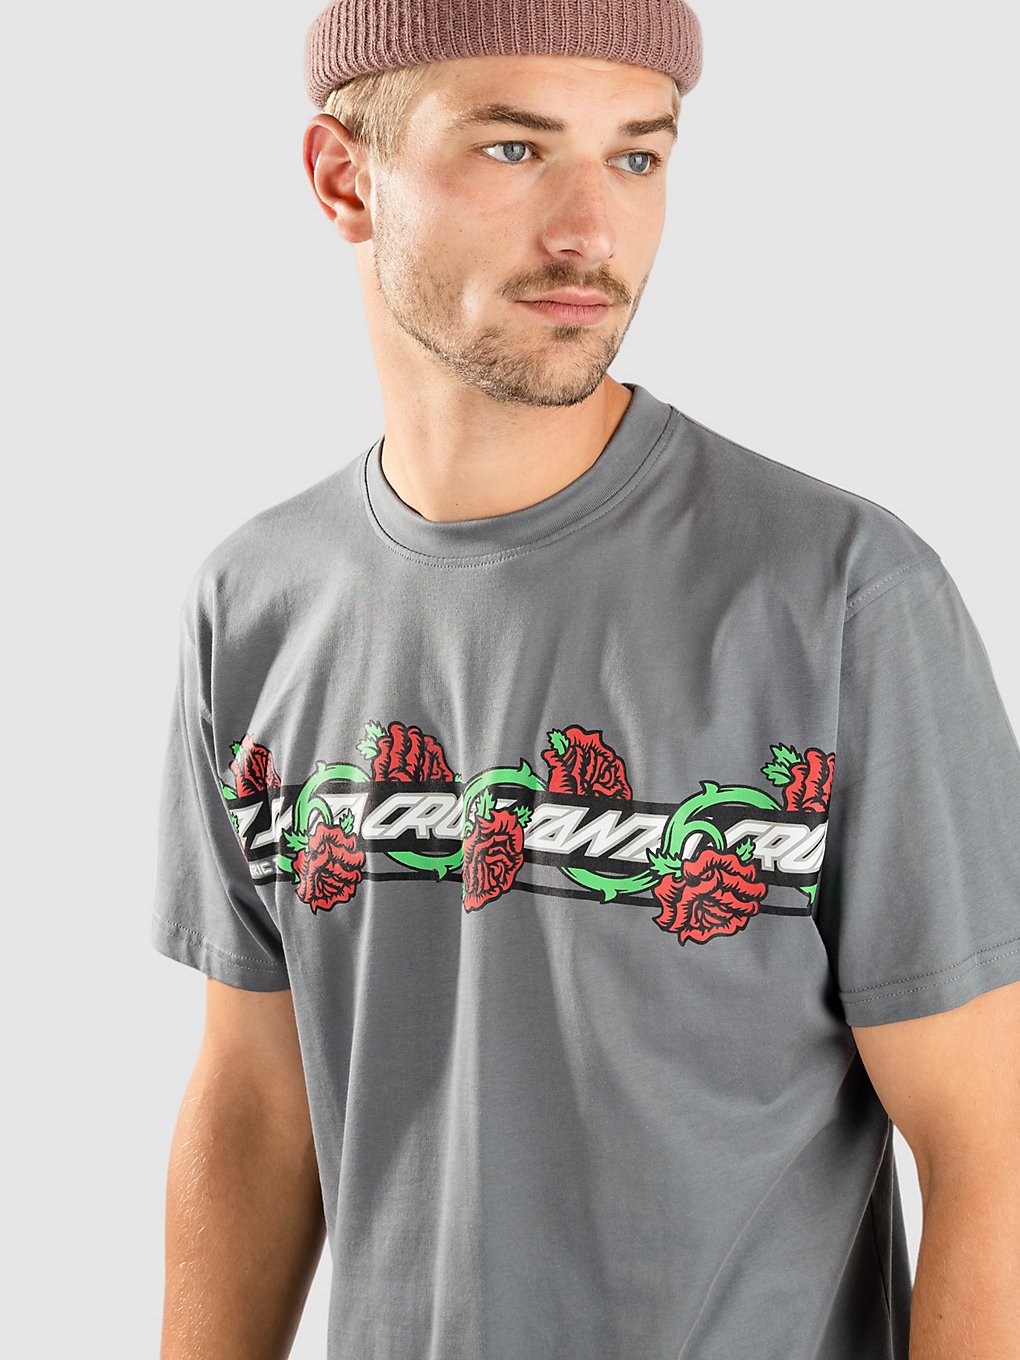 Santa Cruz Dressen Roses Ever-Slick T-Shirt iron kaufen